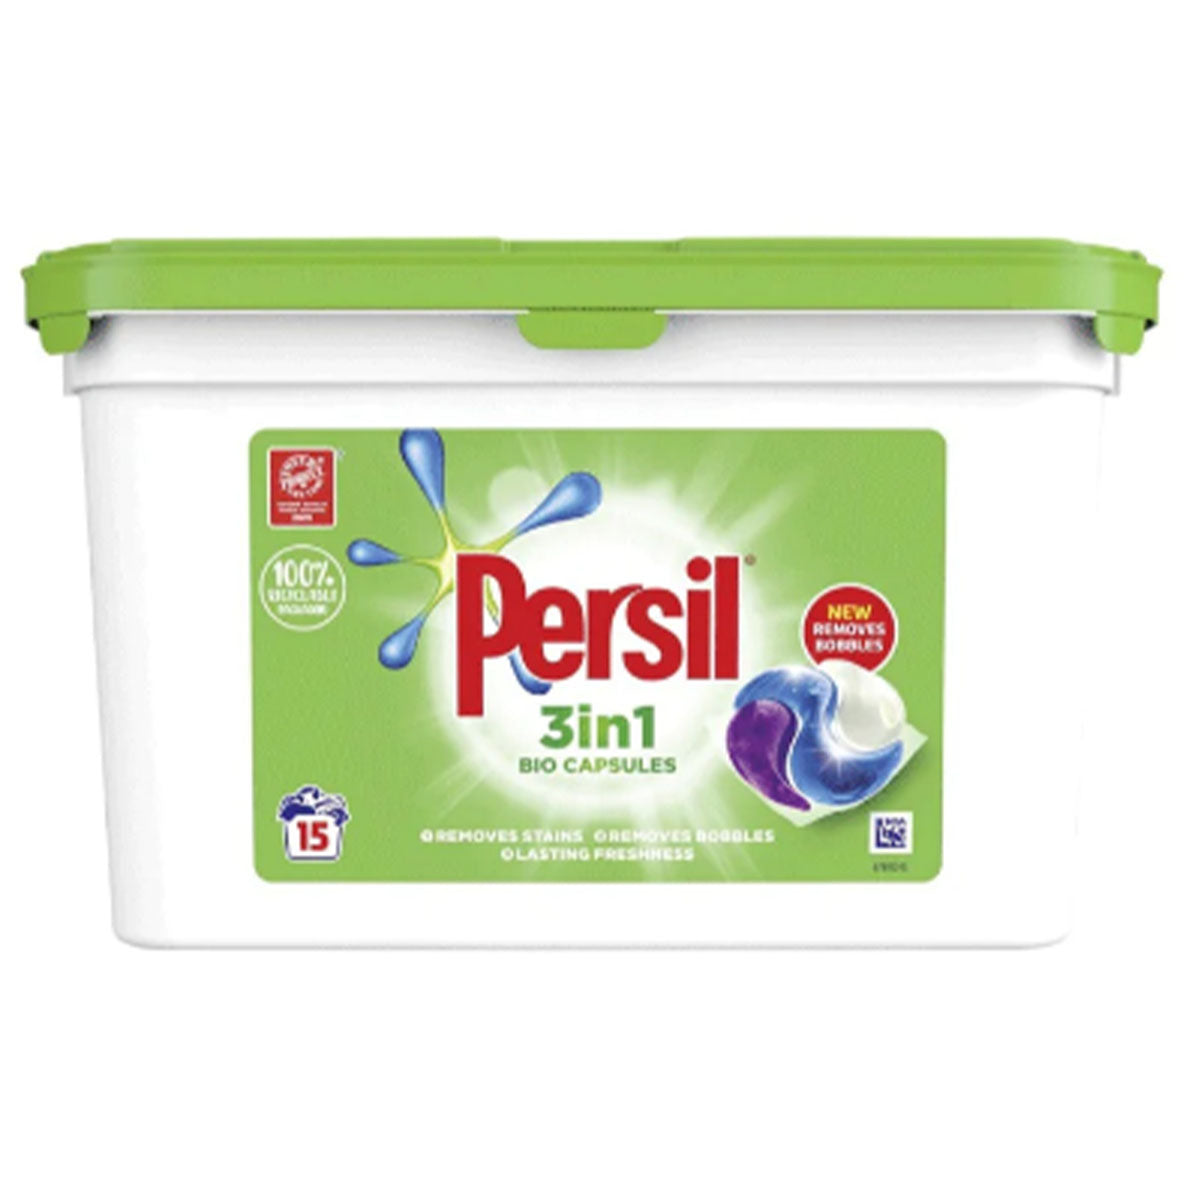 Persil - 3 in 1 Capsules Bio - 15 Wash - Continental Food Store